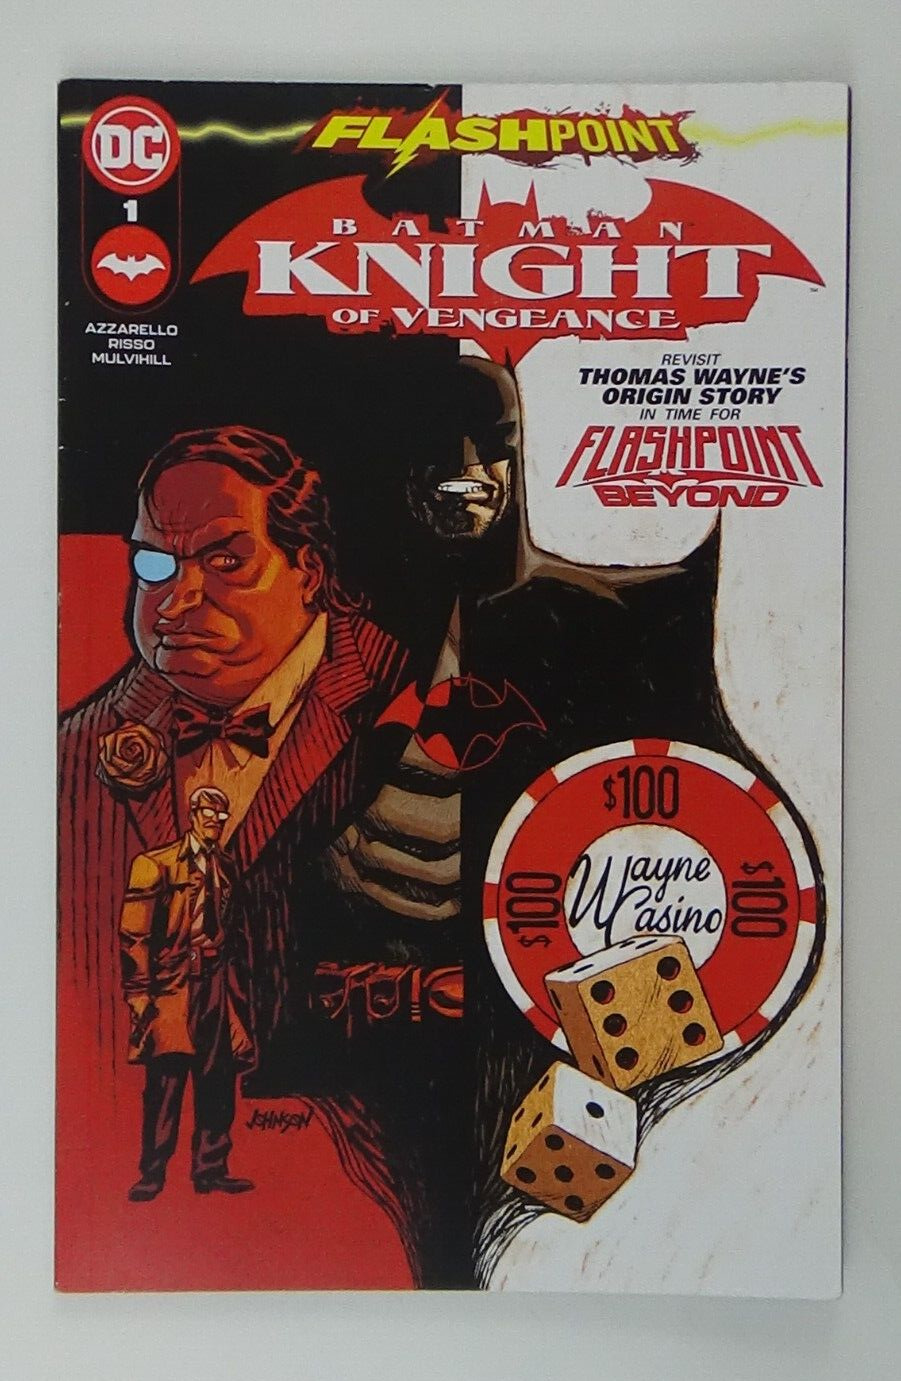 Batman: Knight of Vengence #1 Flashpoint DC Comics Paperback #08